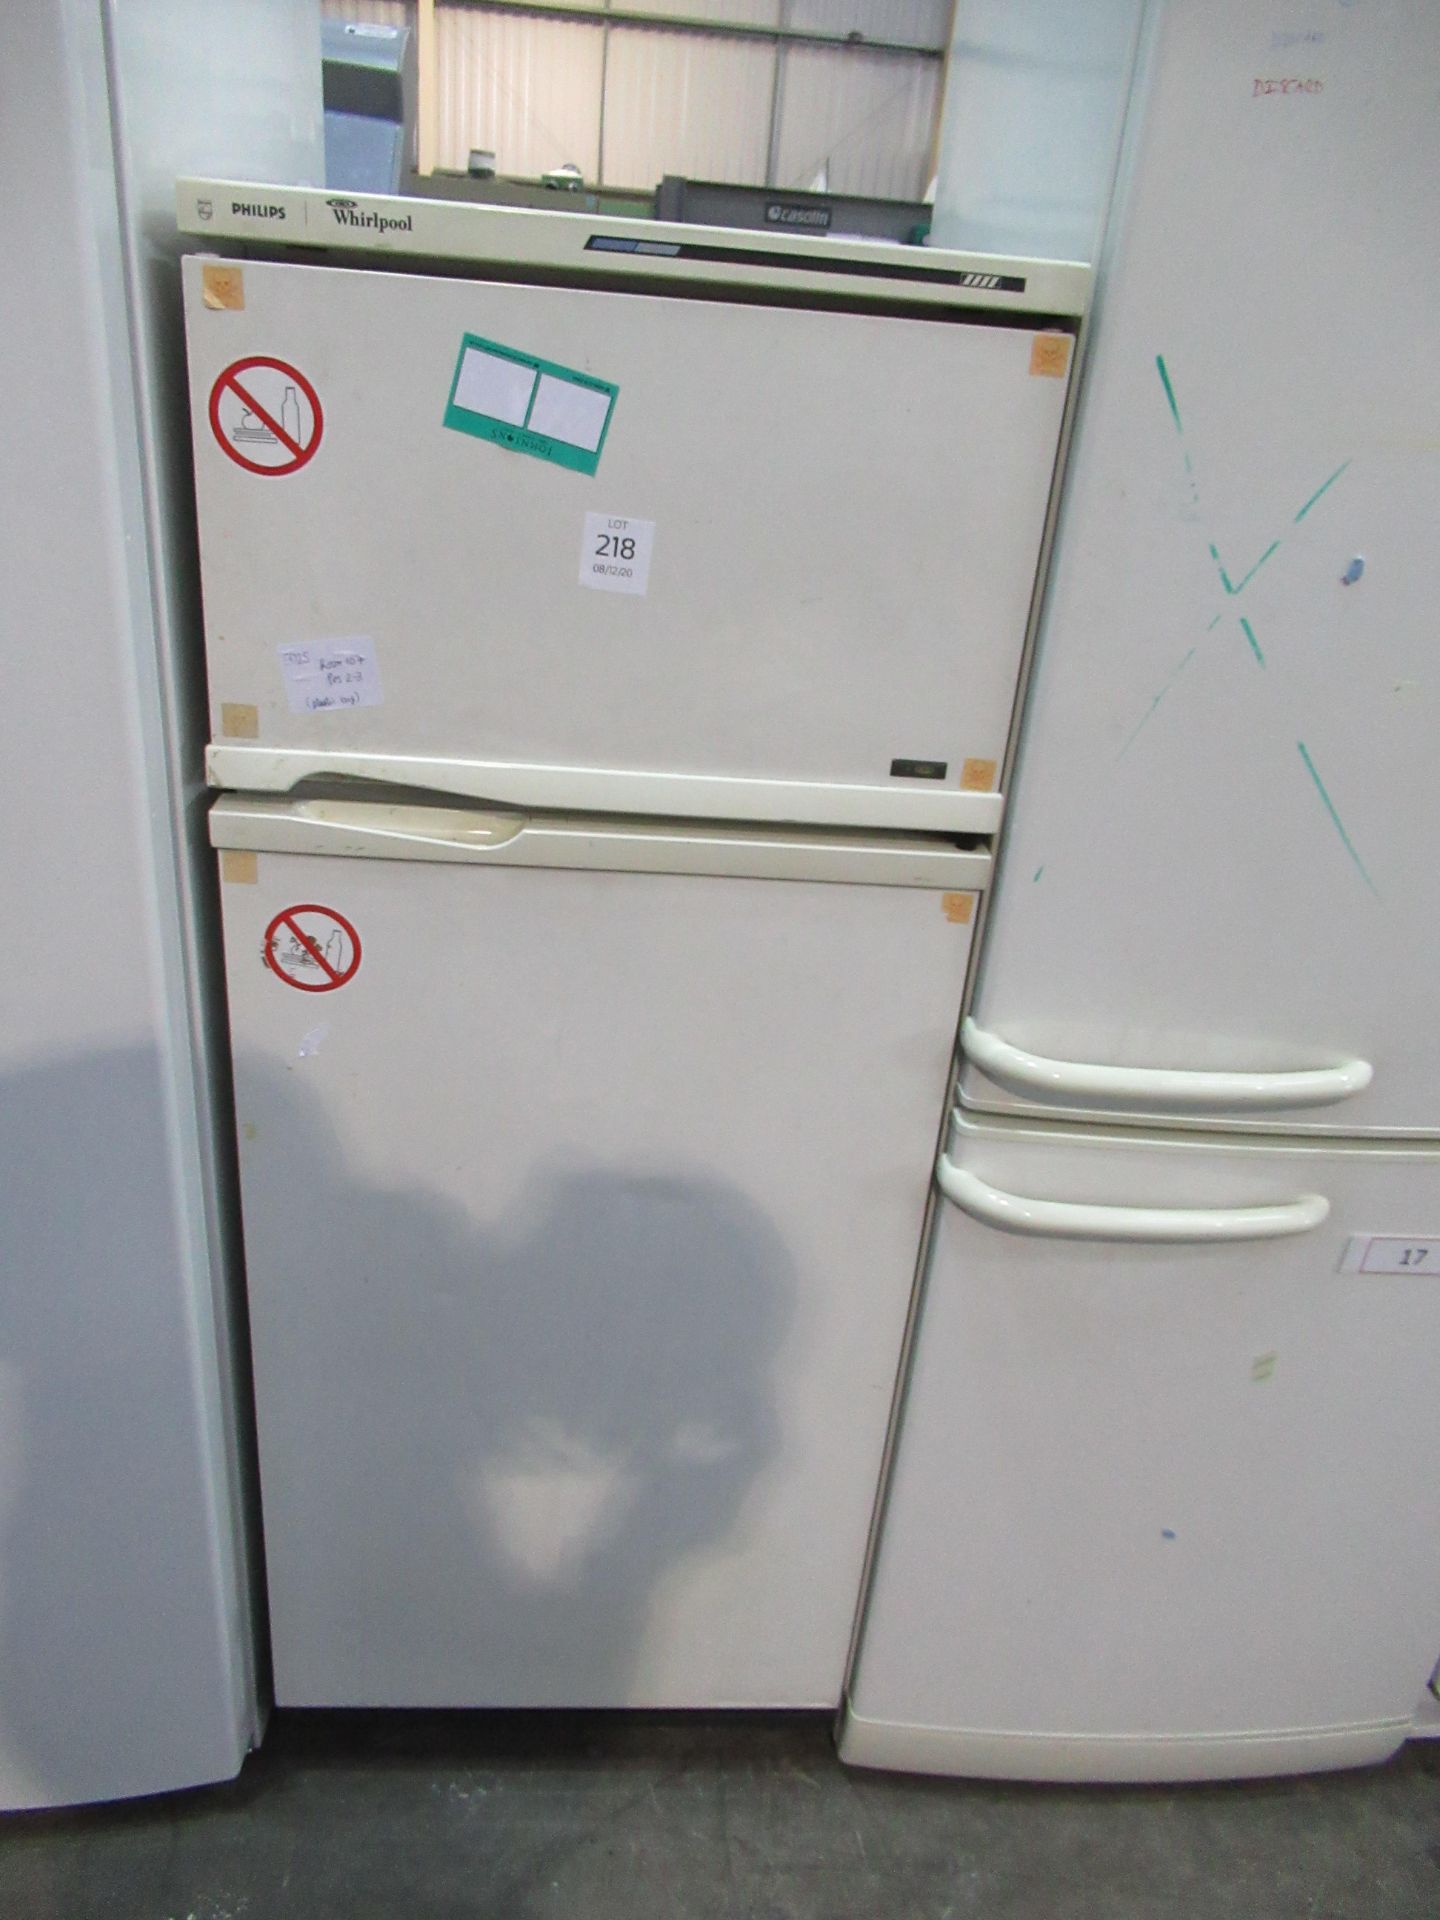 Philips Whirlpool fridge freezer